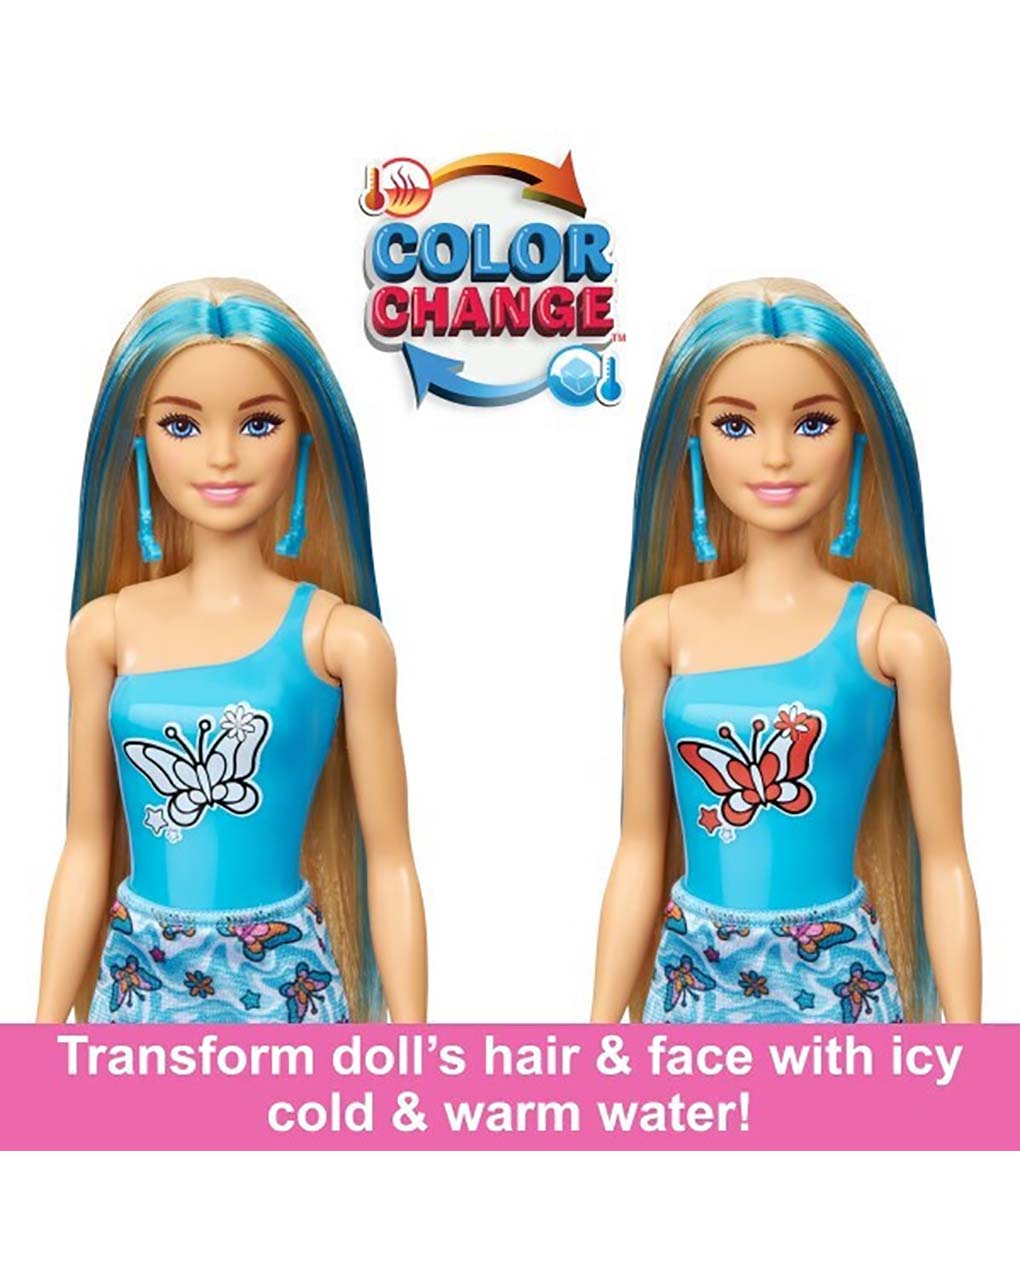 Barbie color reveal σειρά ουράνιο τόξο κούκλα και αξεσουάρ με 6 εκπλήξεις hrk06 - BARBIE